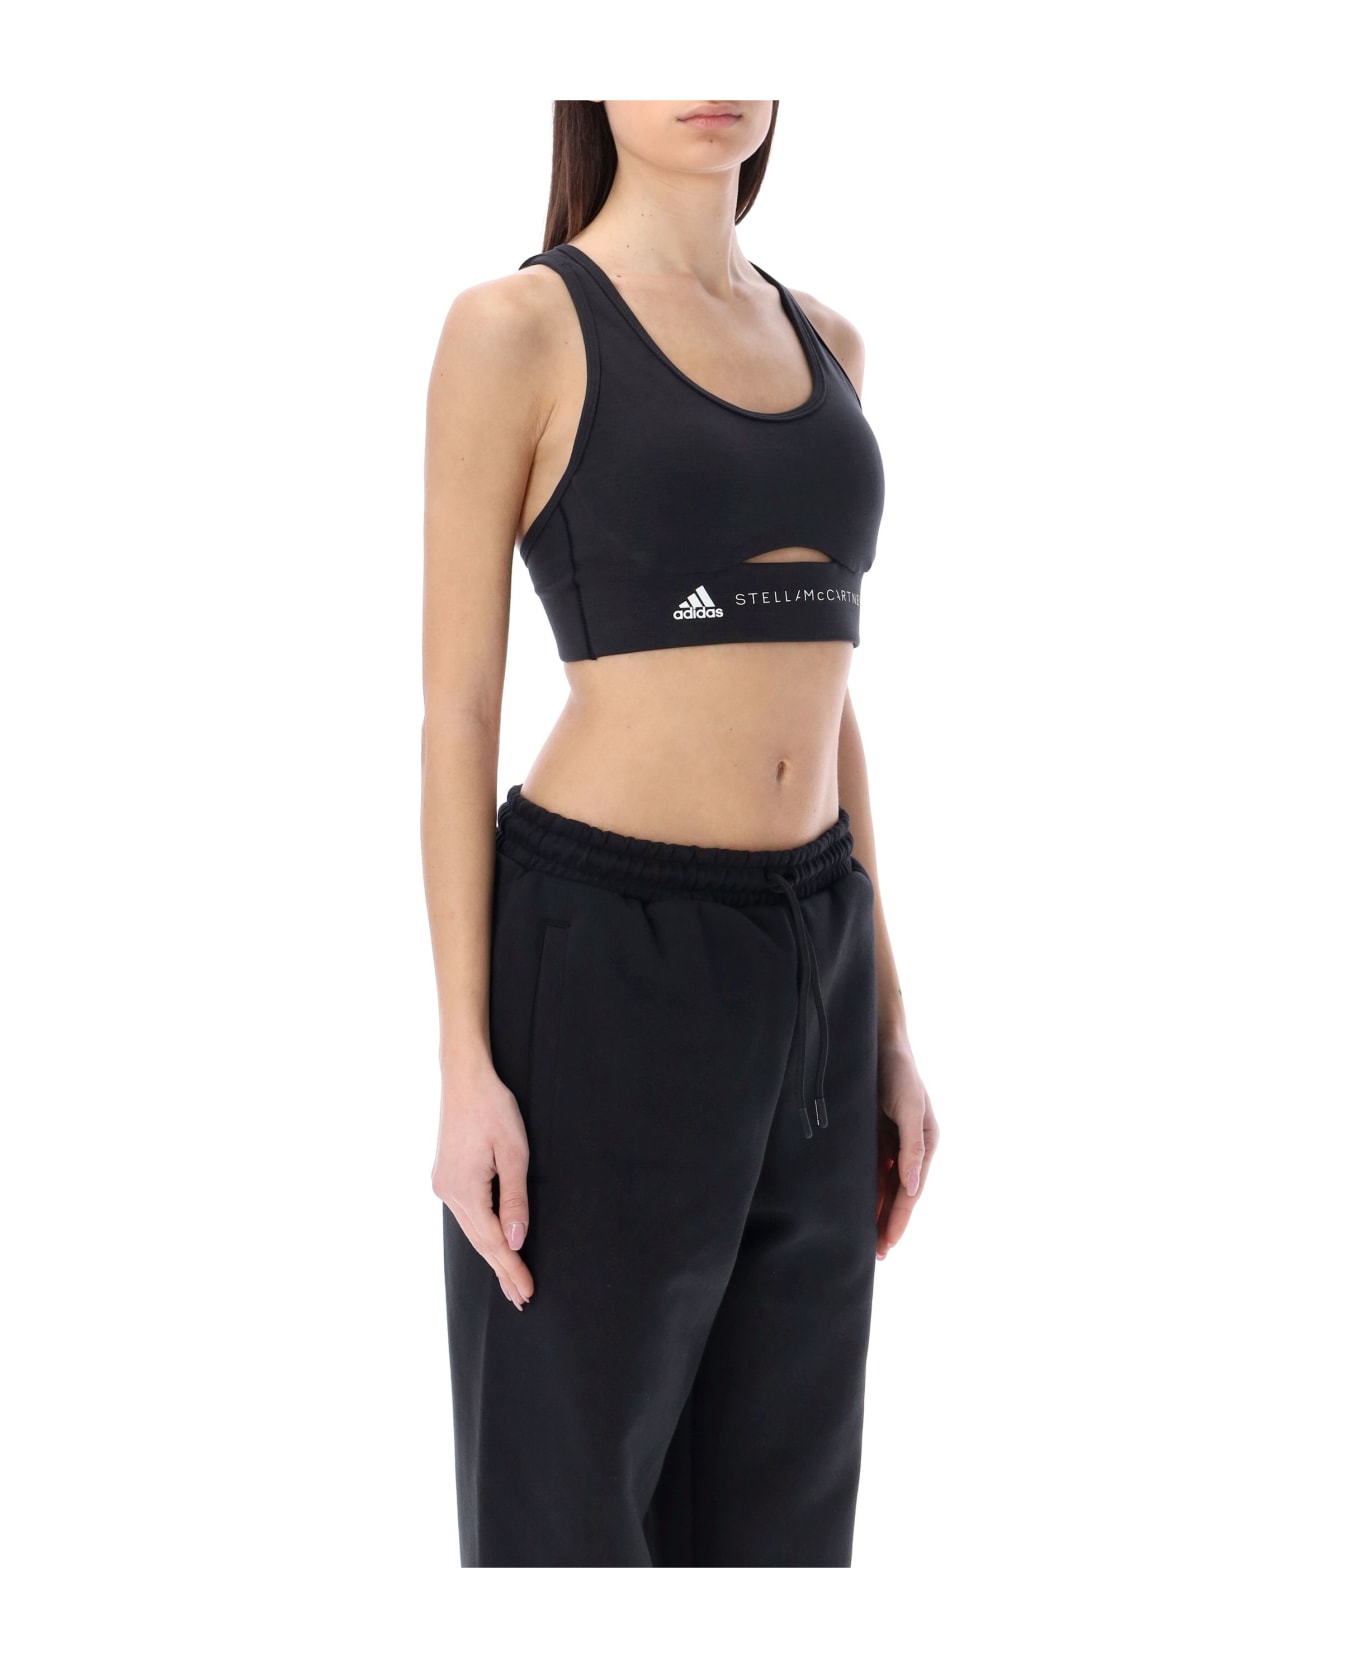 Adidas by Stella McCartney Truestrength Yoga Medium Support Sports Bra - Black/white ボトムス